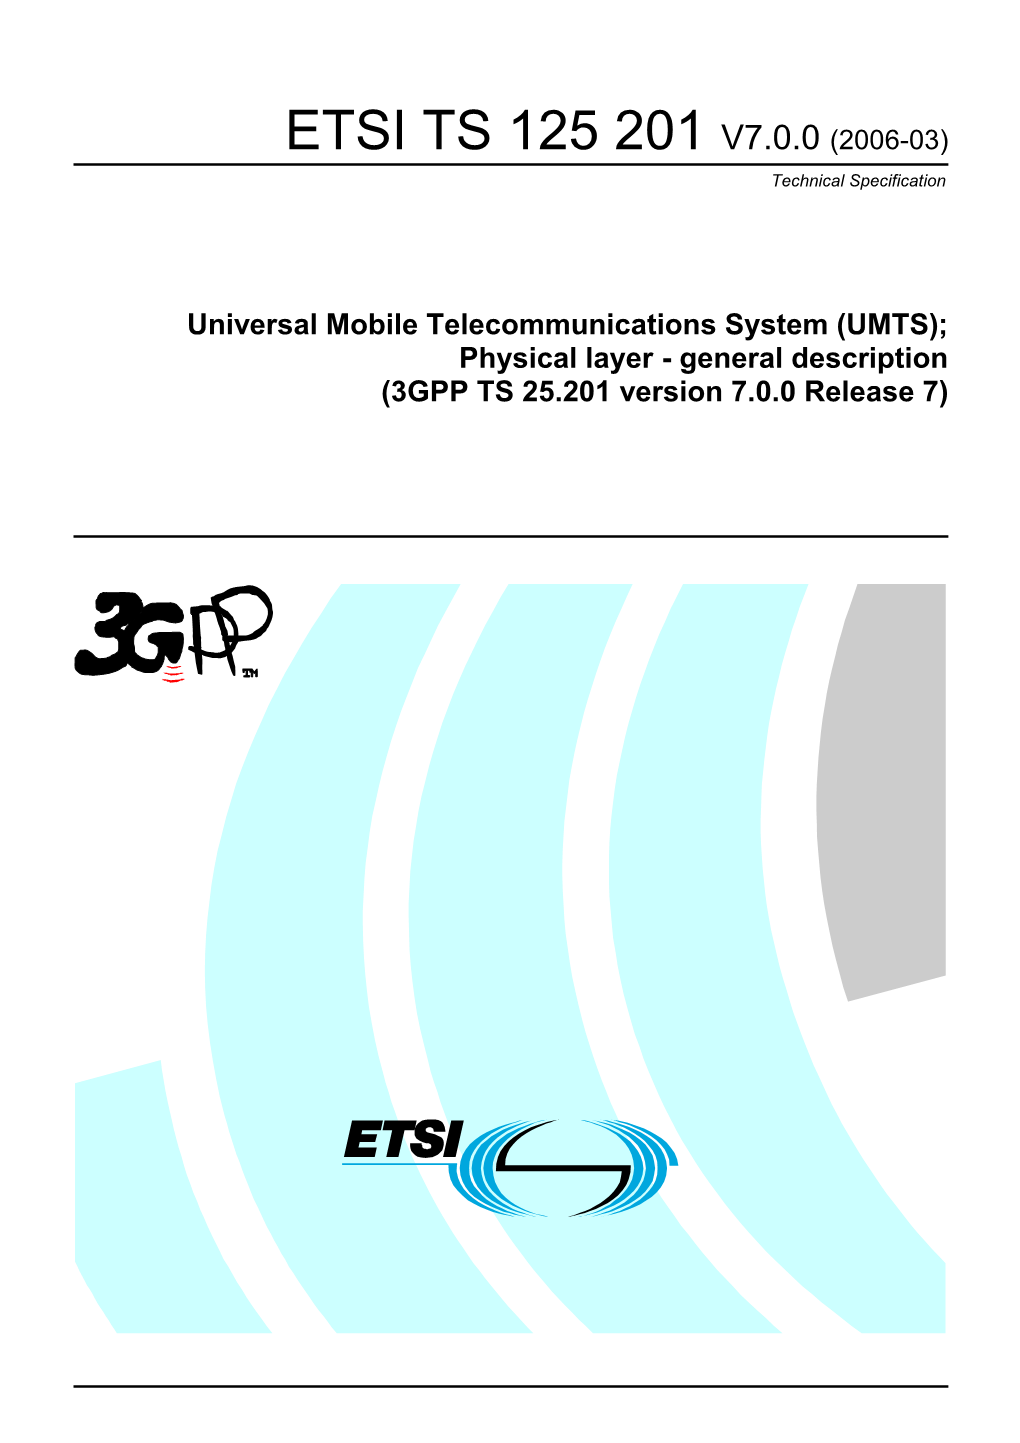 ETSI TS 125 201 V7.0.0 (2006-03) Technical Specification